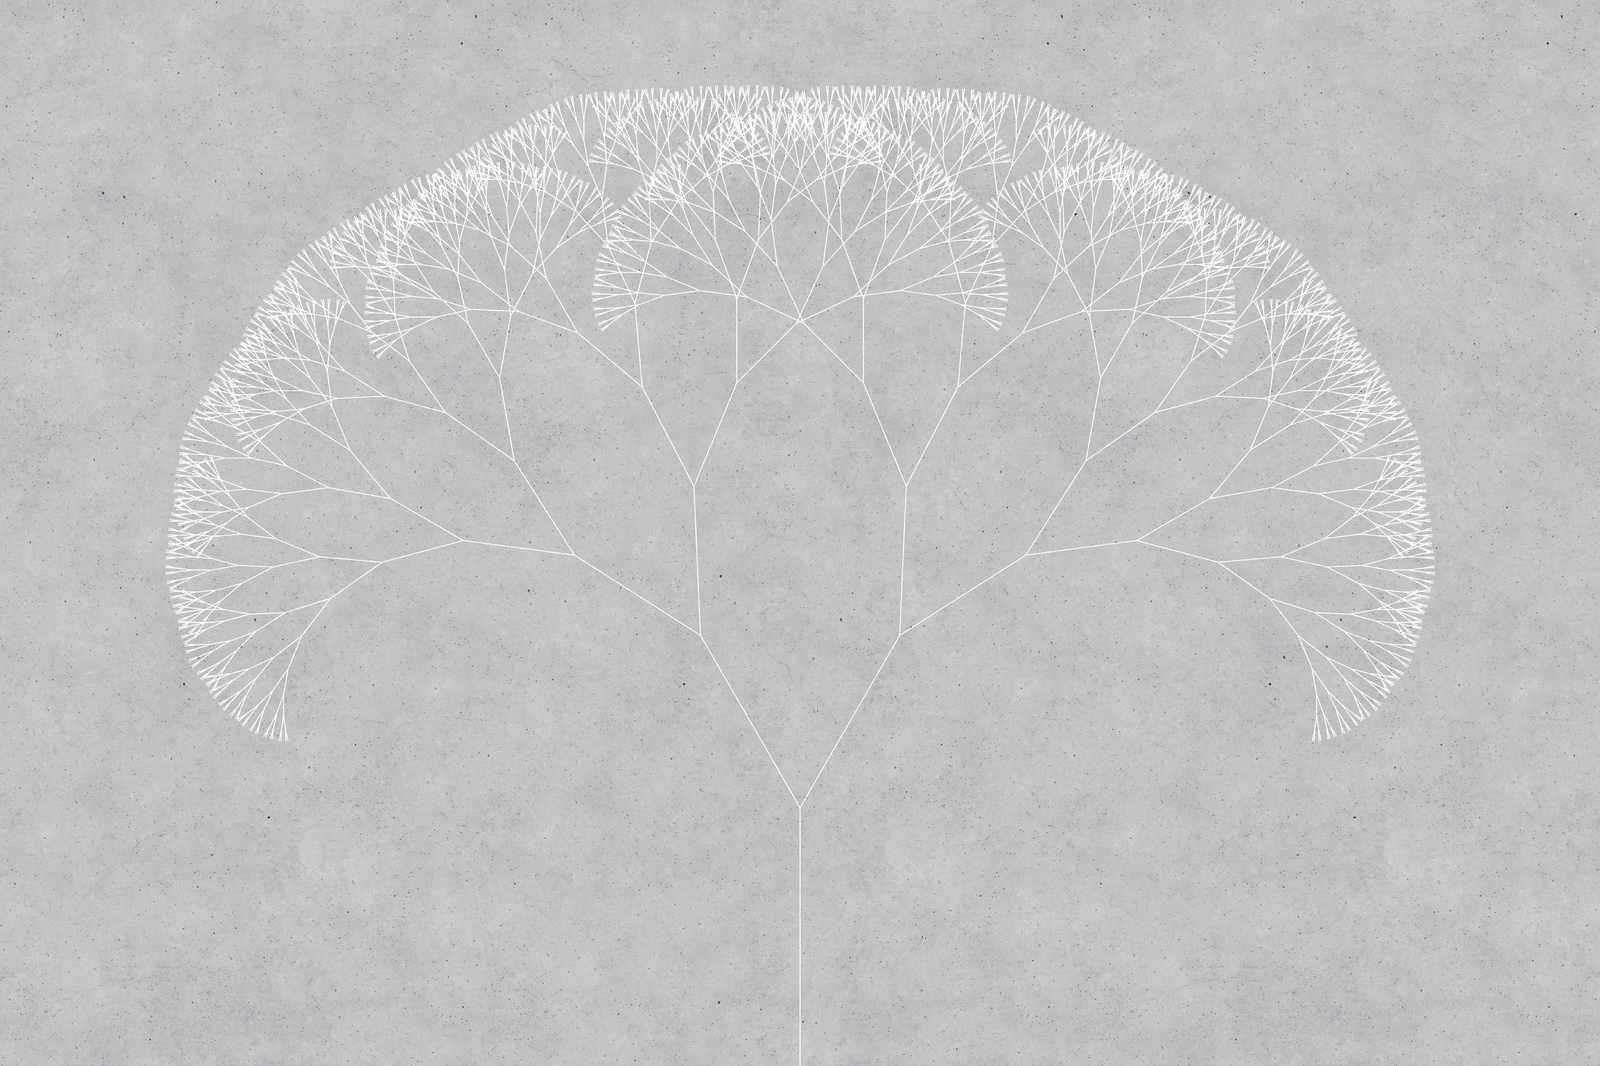             Canvas painting Dandelions Tree | grey, white - 0,90 m x 0,60 m
        